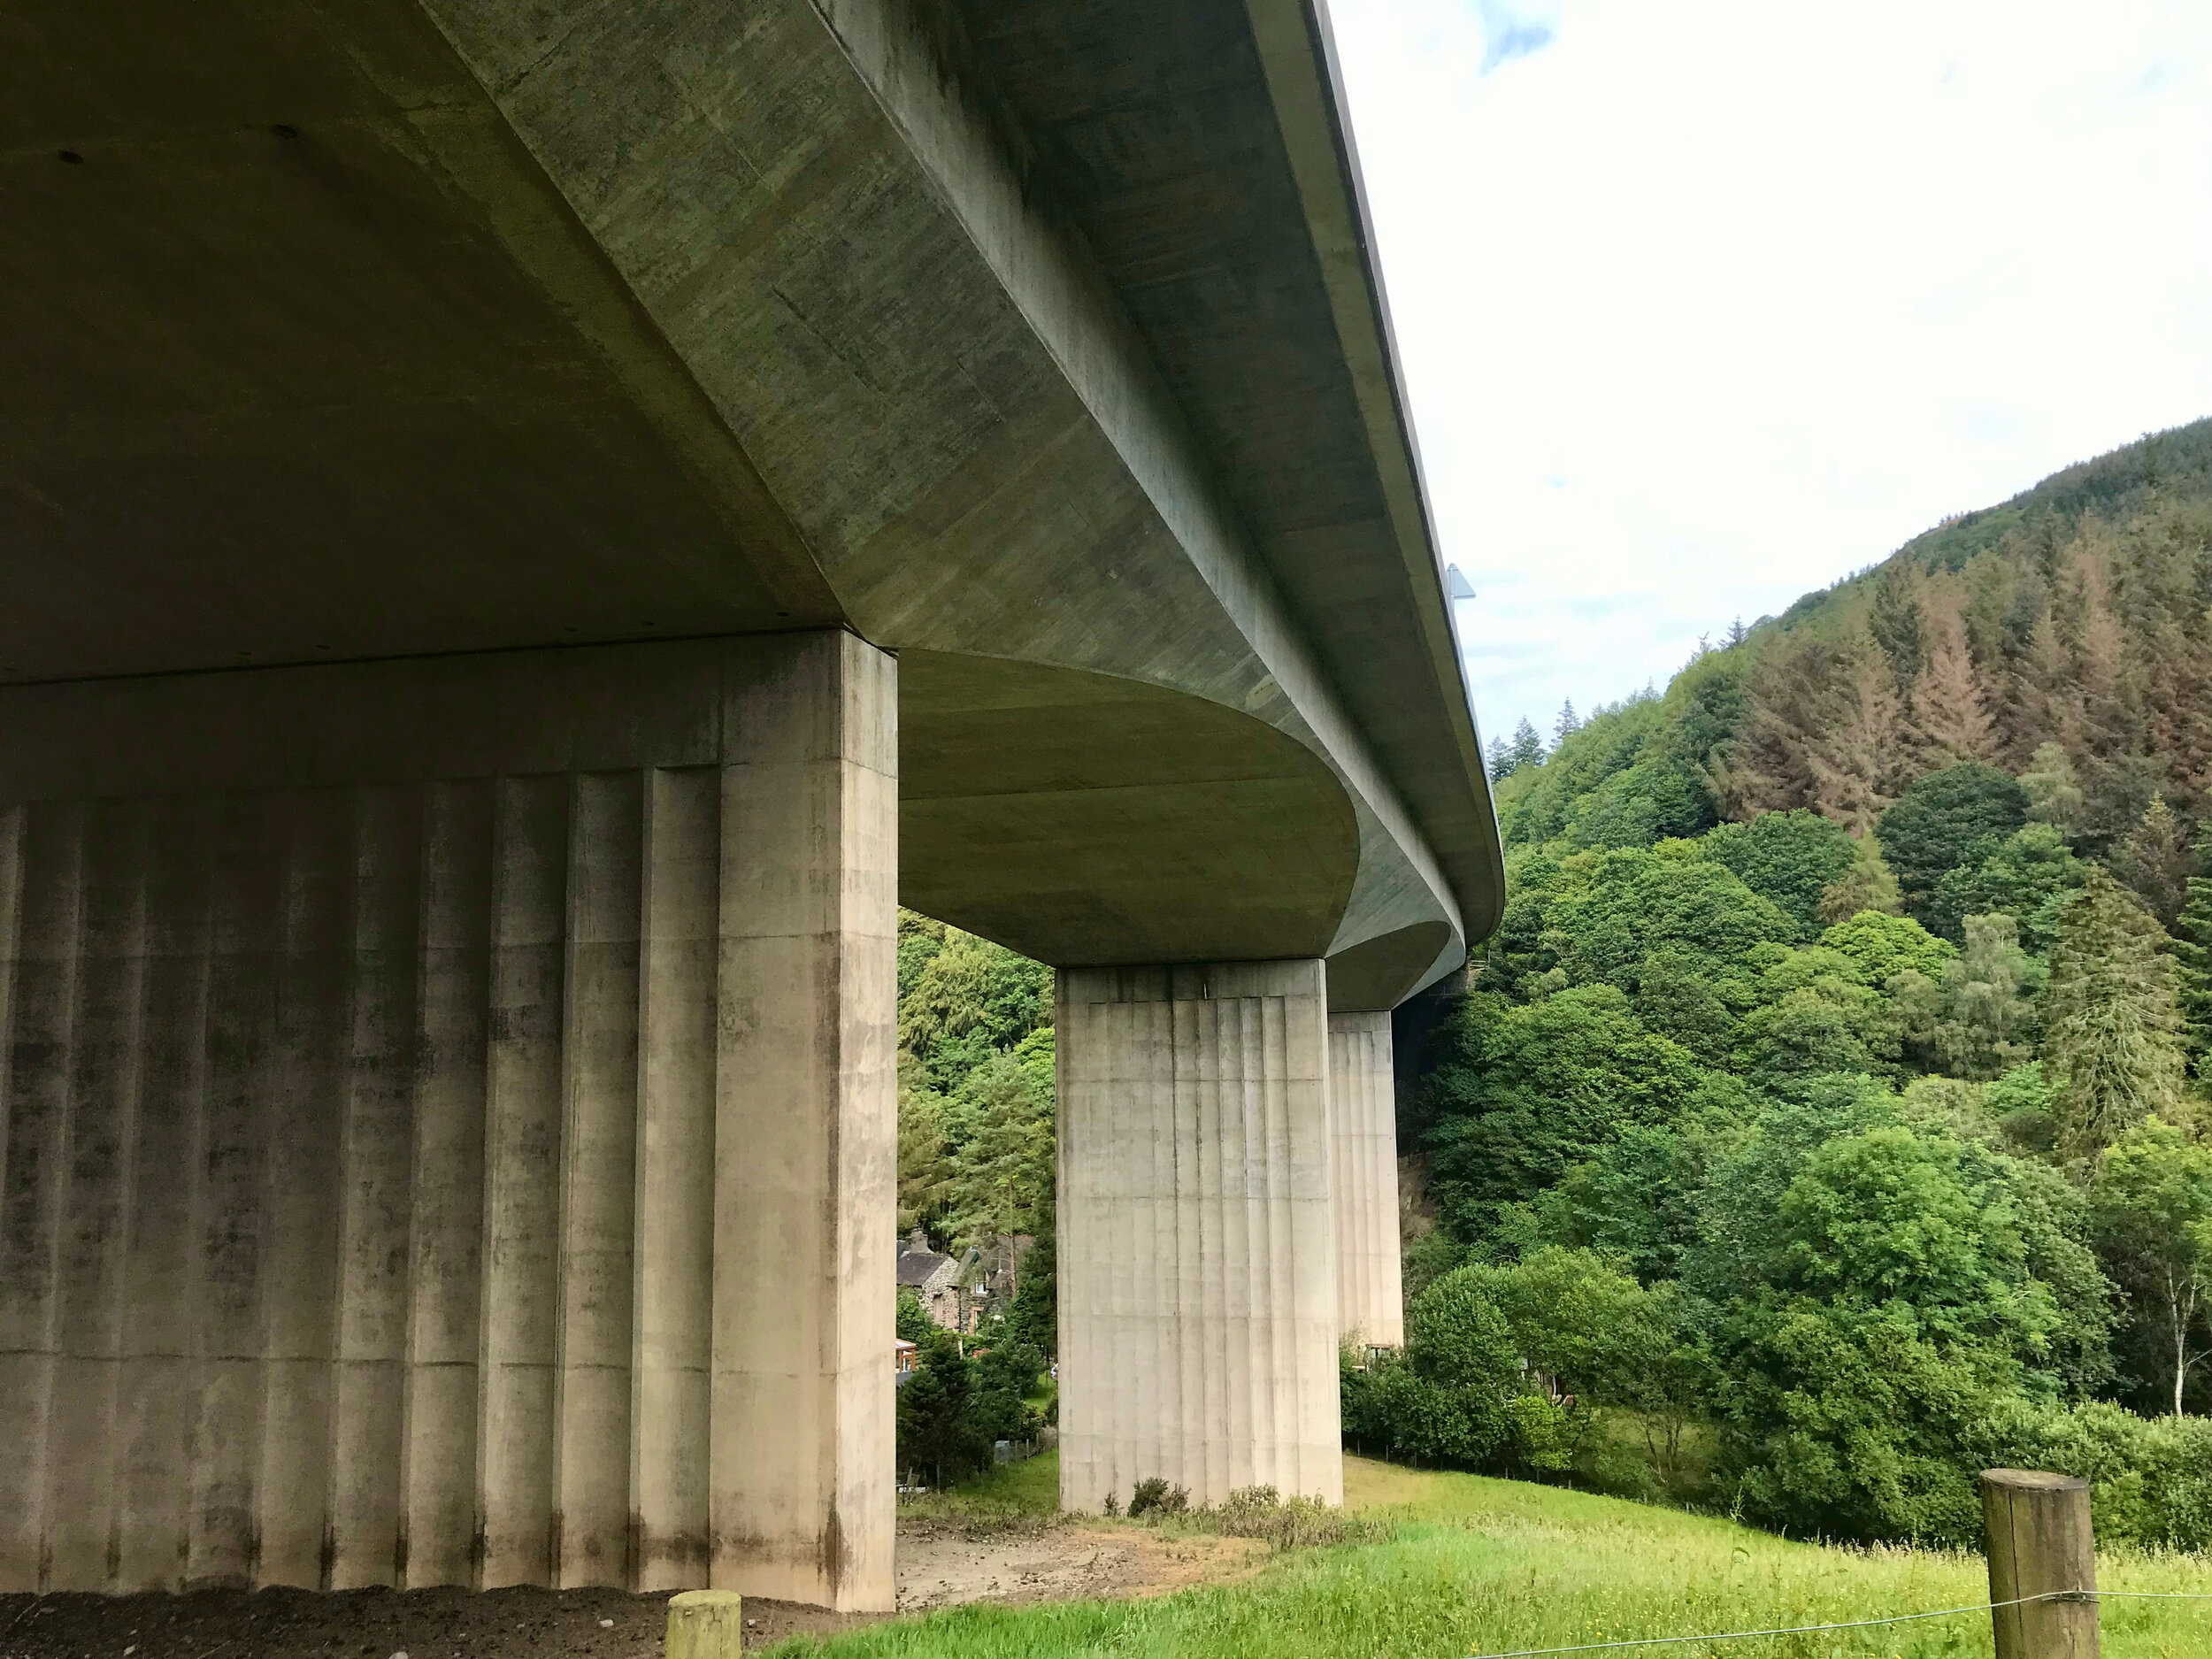 Greta Bridge carries the A66 past Keswick to West Cumbria